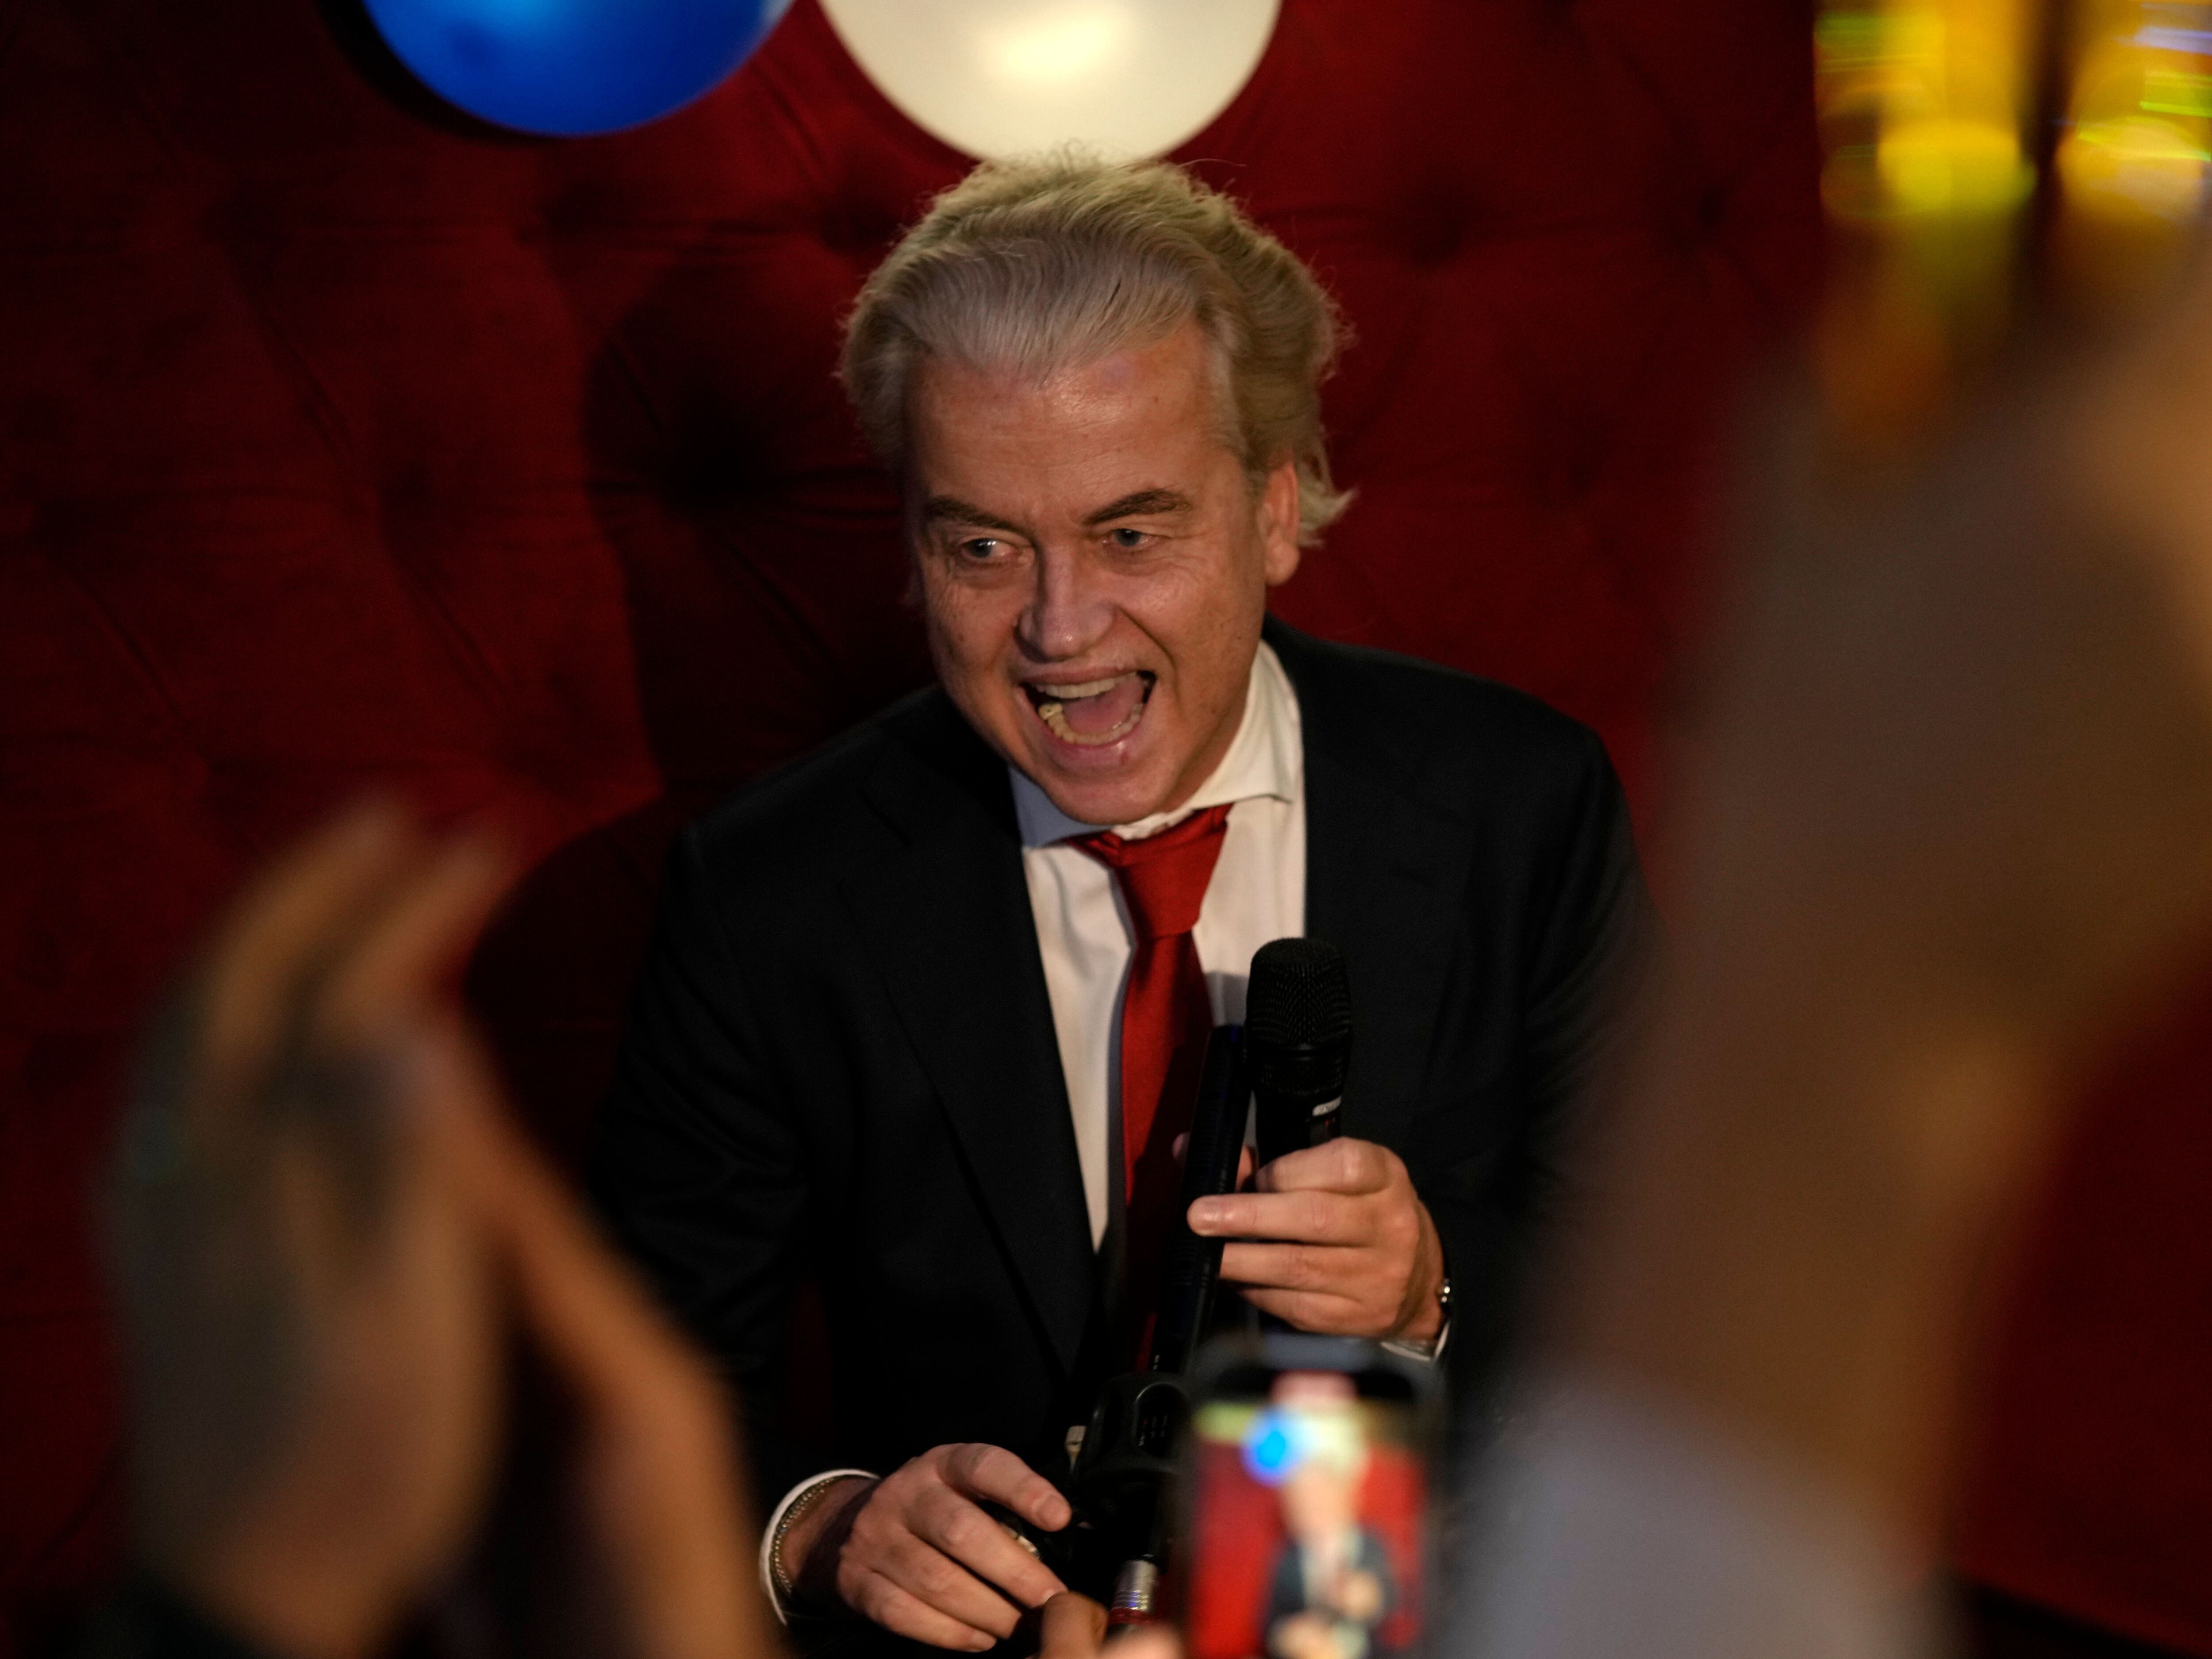 Anti-Islam populist Geert Wilders wins most votes, Dutch exit poll predicts